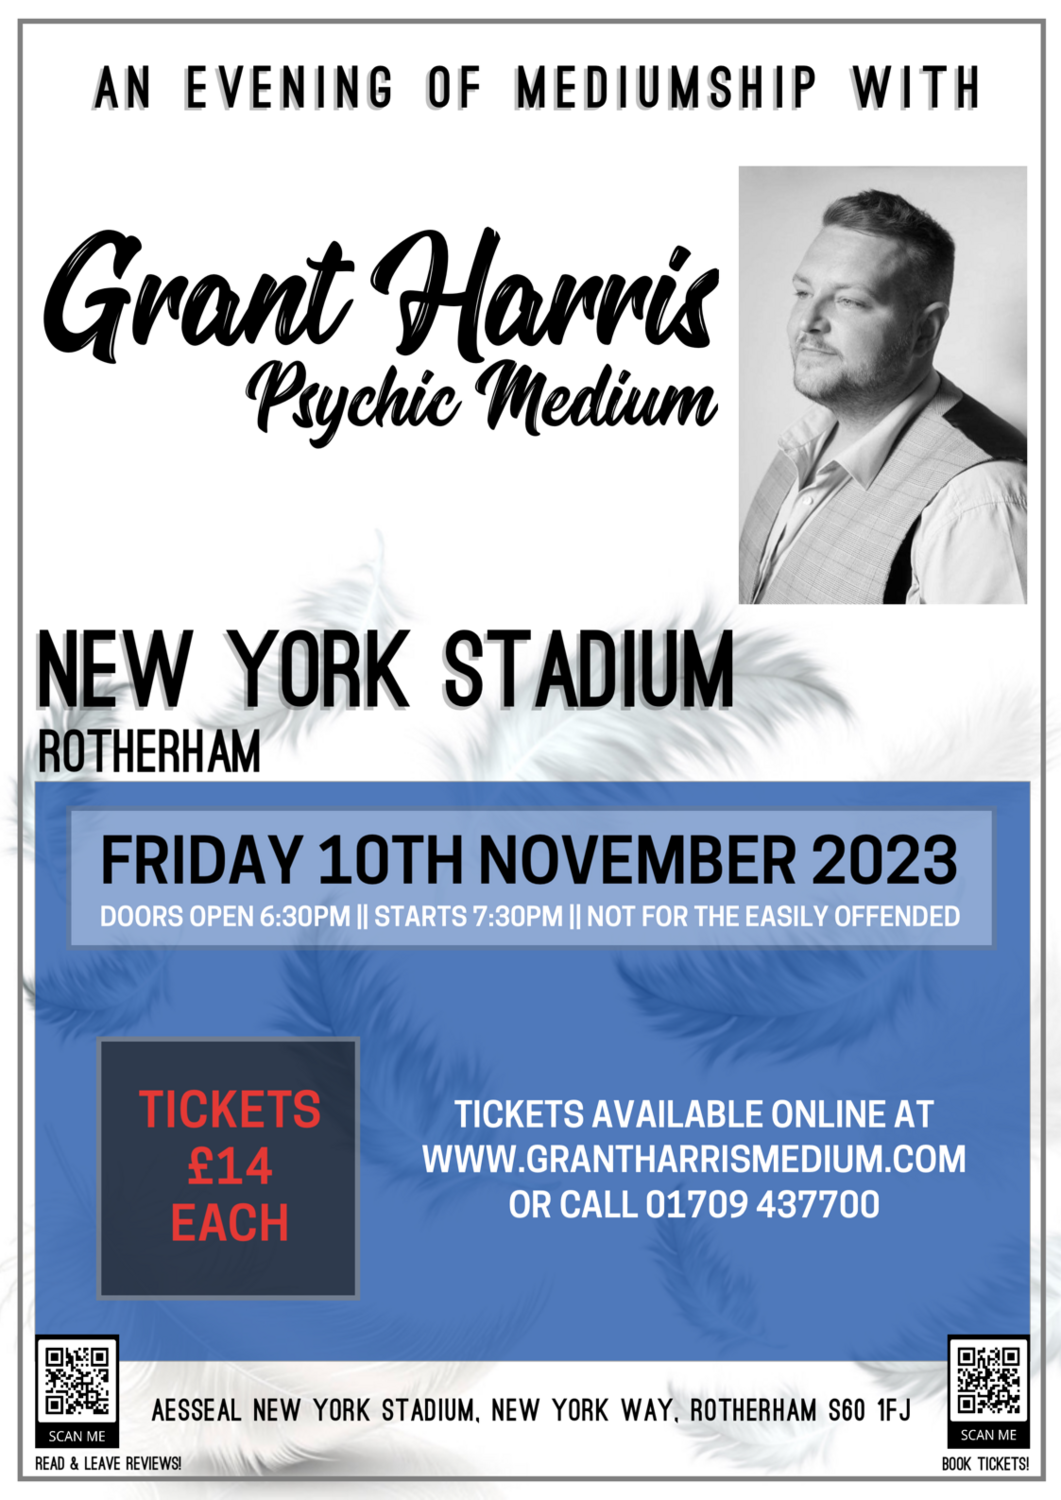 Aesseal New York Stadium, Rotherham, Friday 10th November 2023